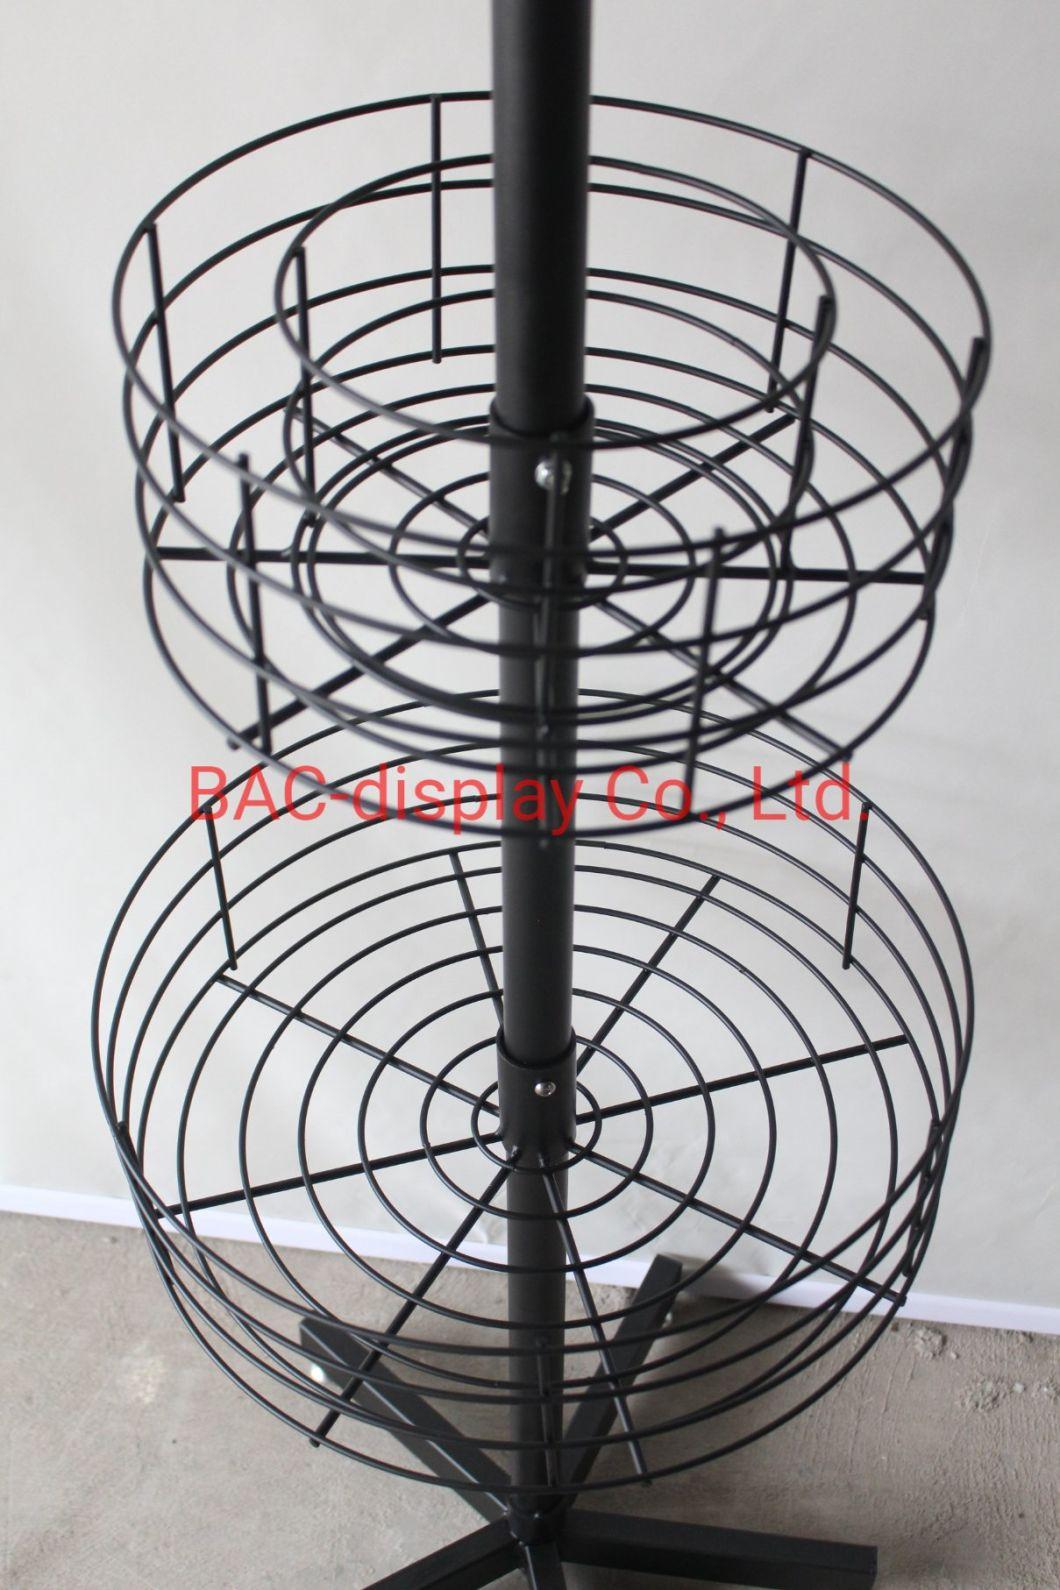 Customized Metal Wire Shelf Display Rack with Wheels